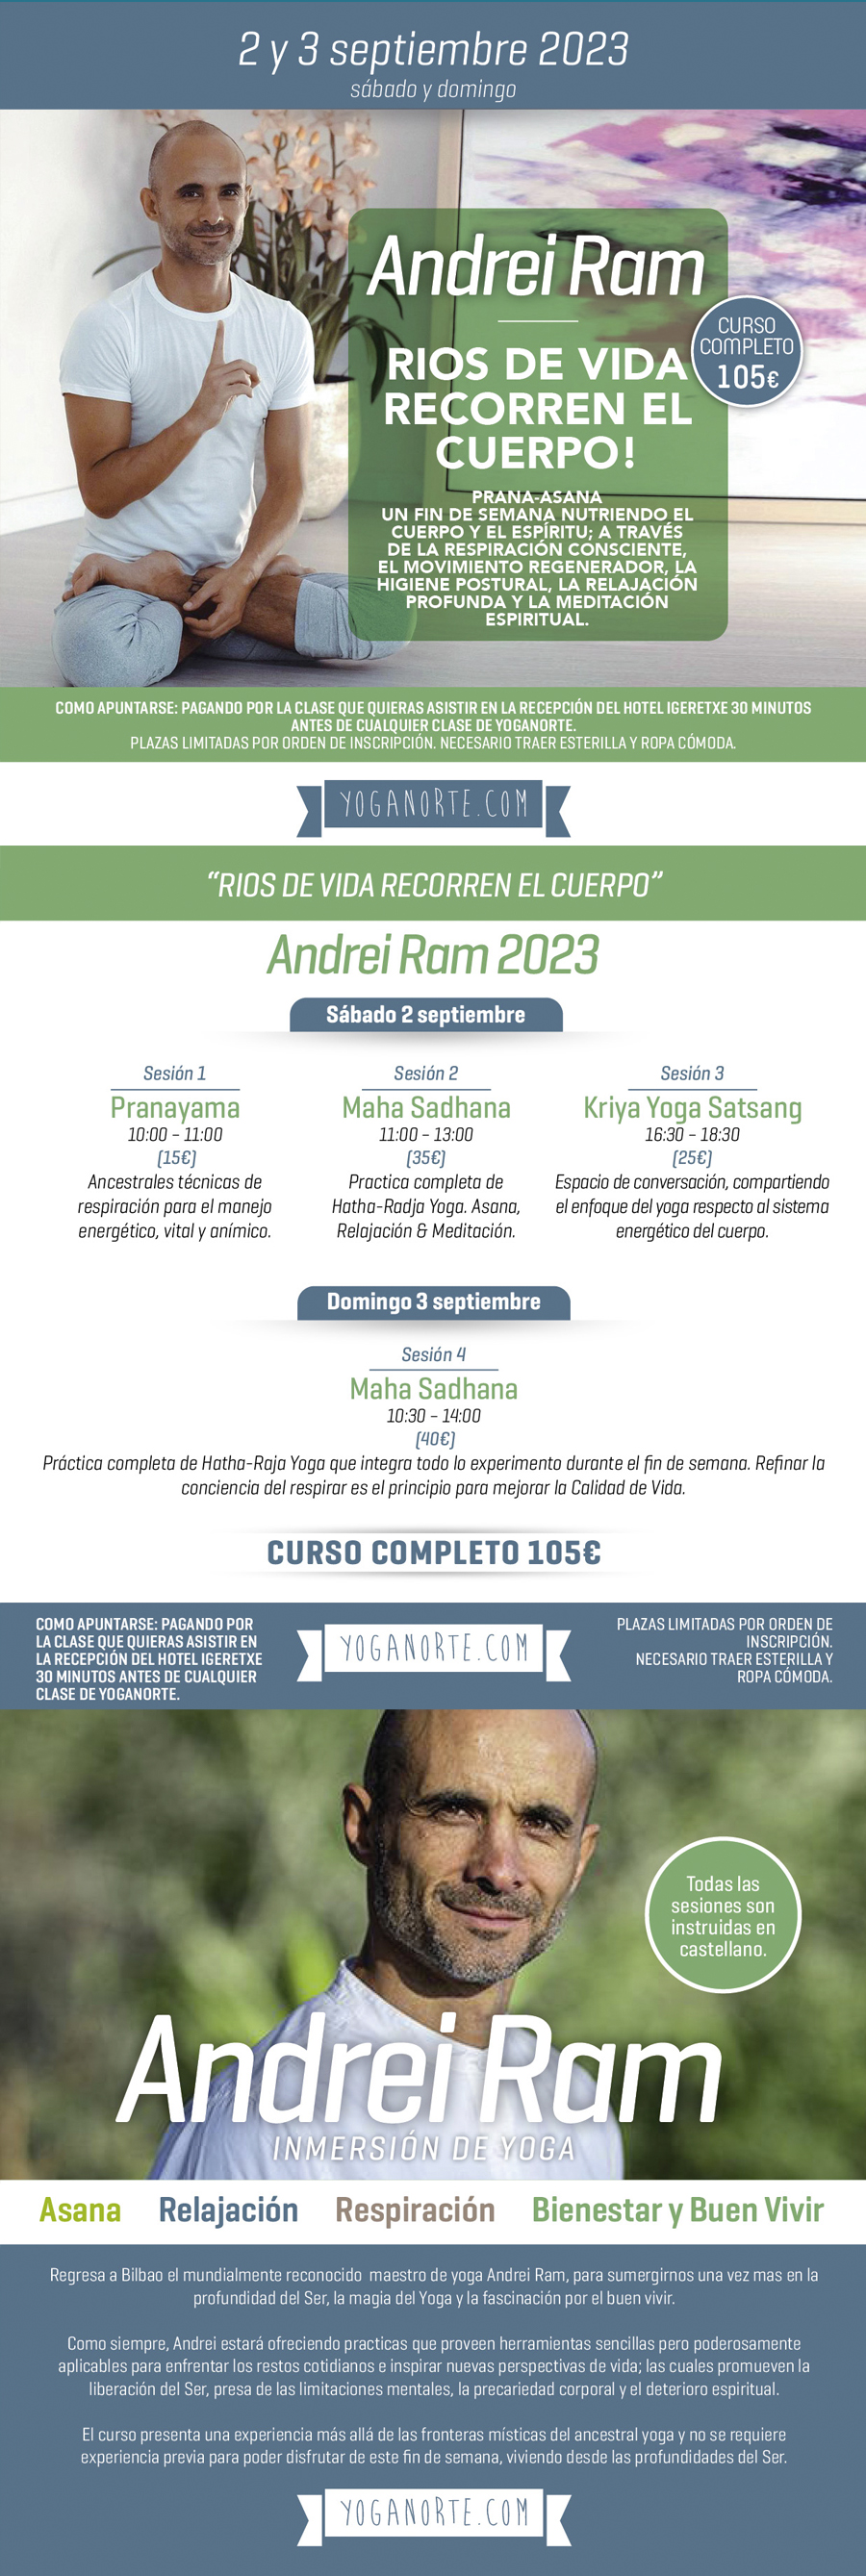 ANDREI RAM SEPTIEMBRE 2023